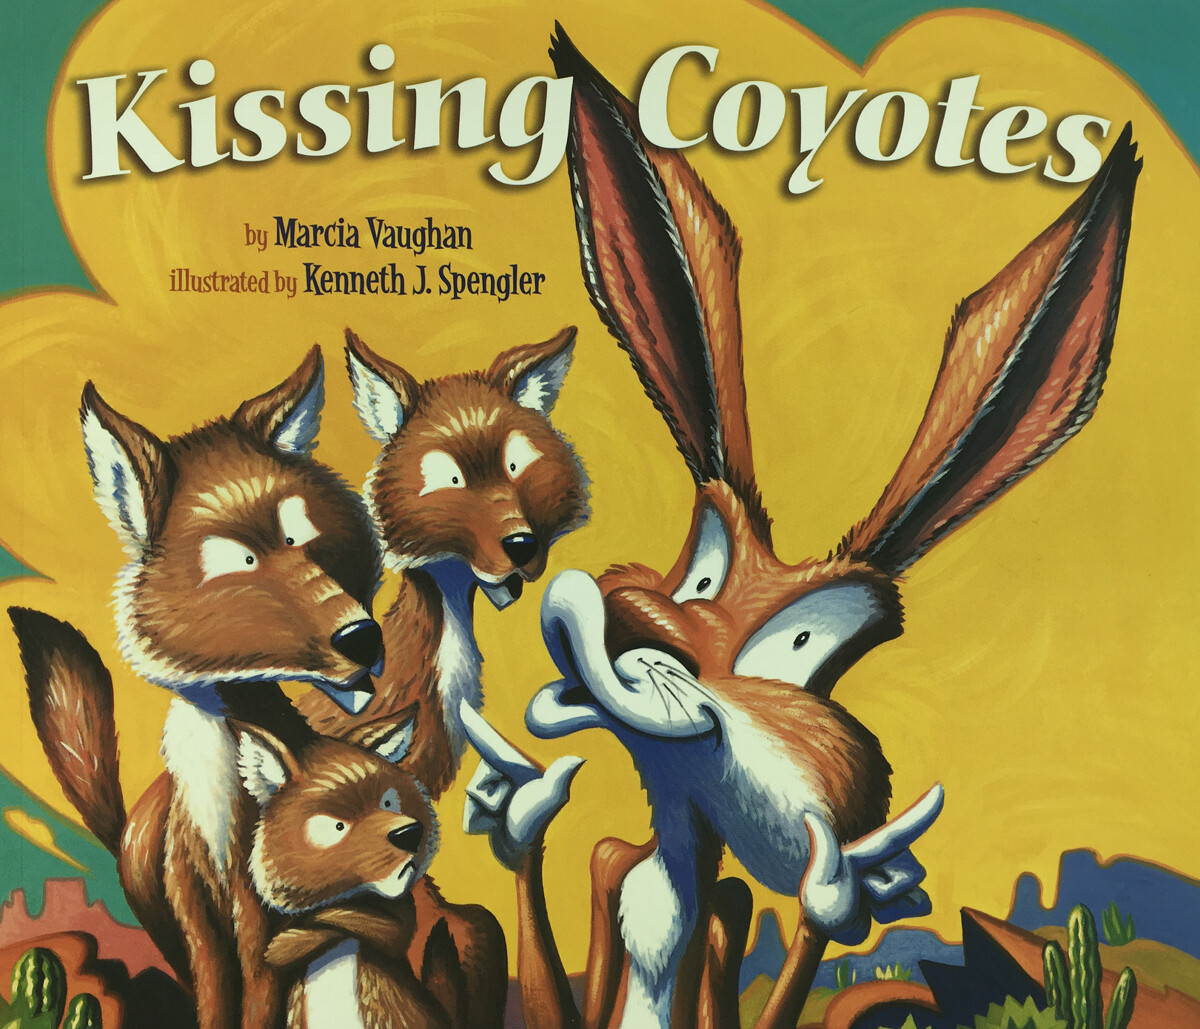 Kissing Coyotoes